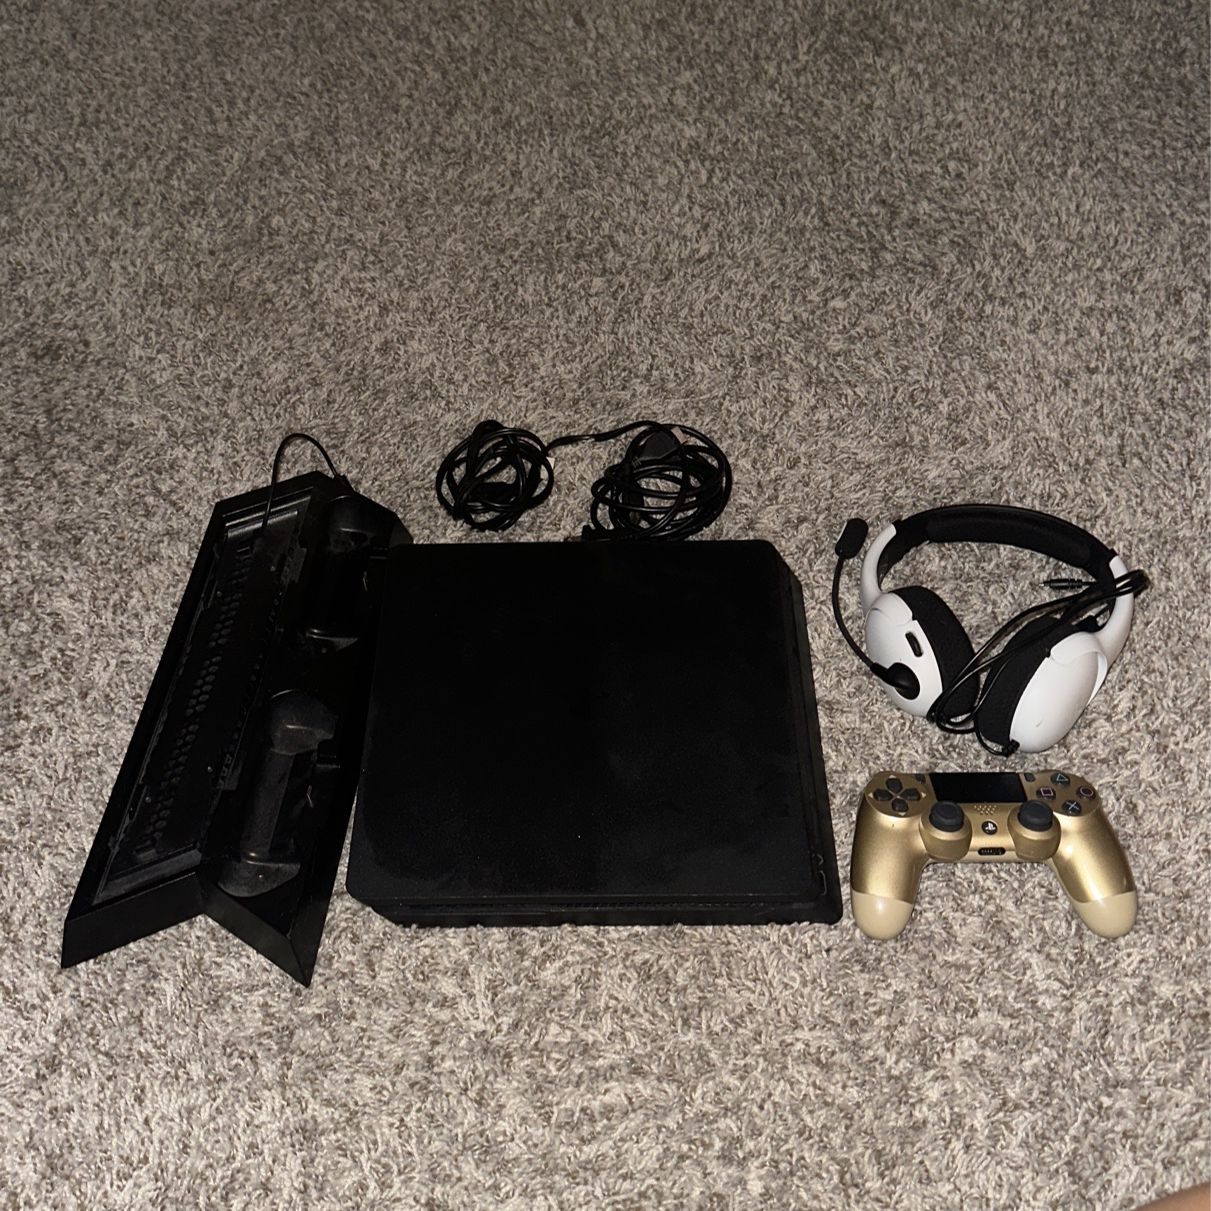 PS4 Slim, Controller, Headset, Charging Port 